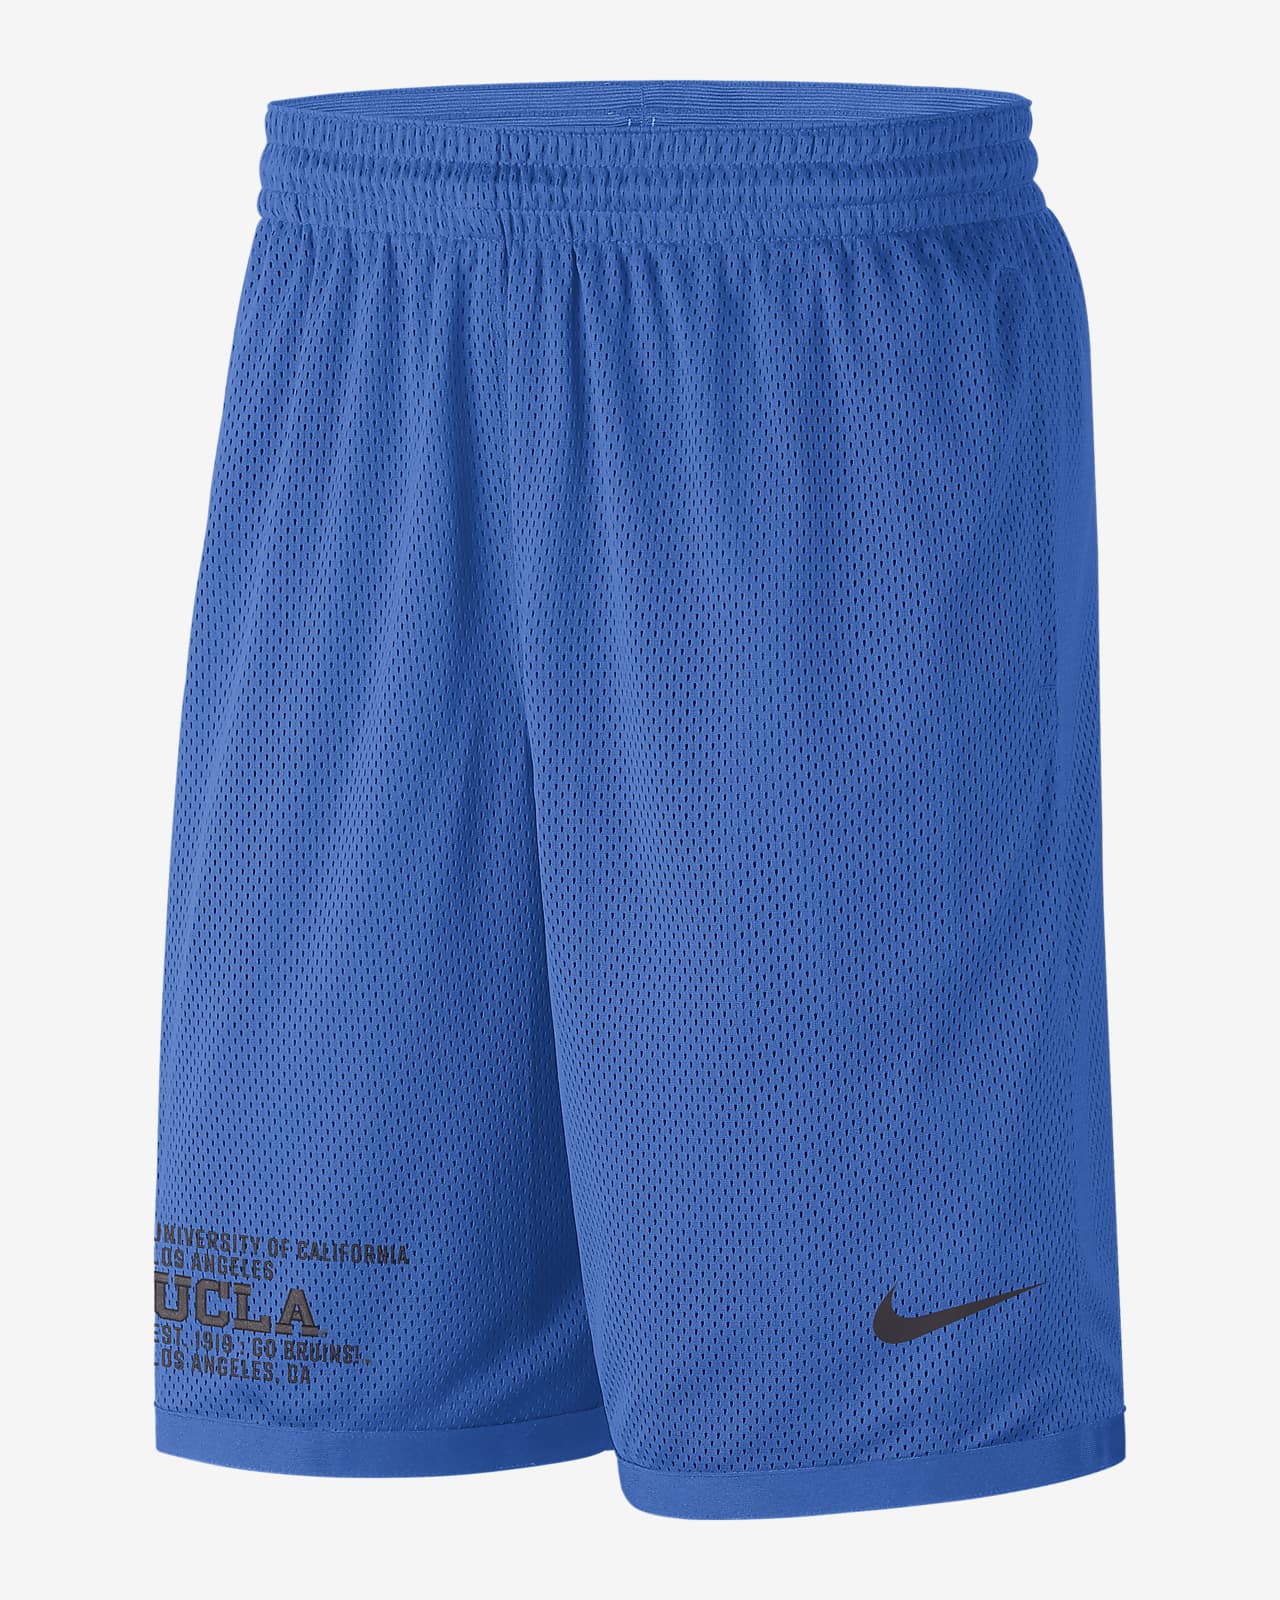 Shorts para hombre Nike College Dri-FIT Nike.com